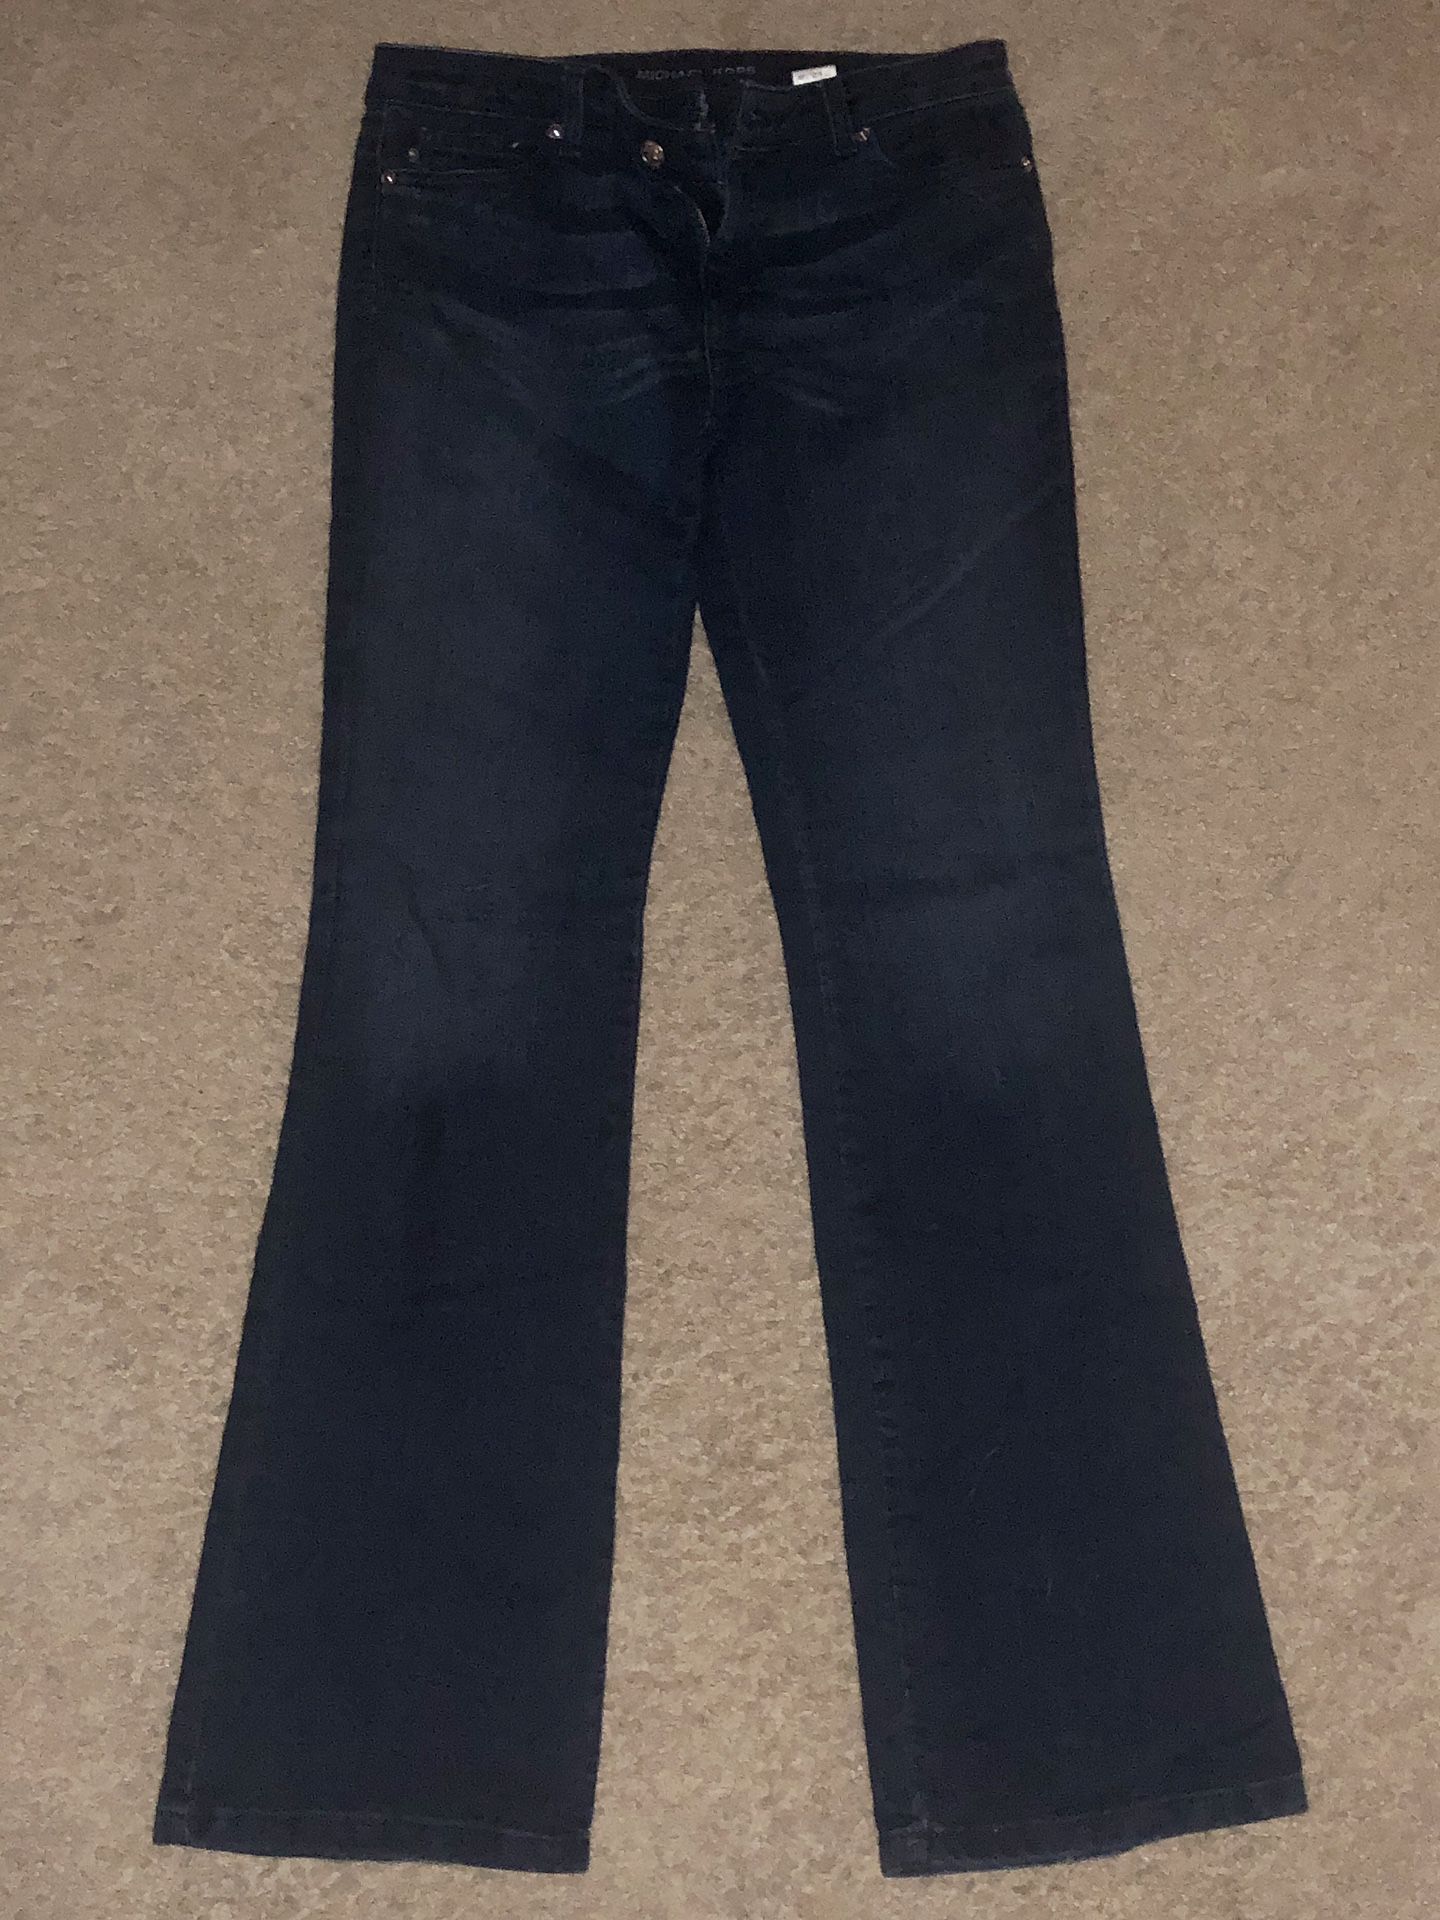 Michael Kors Women’s Size 4 Jeans